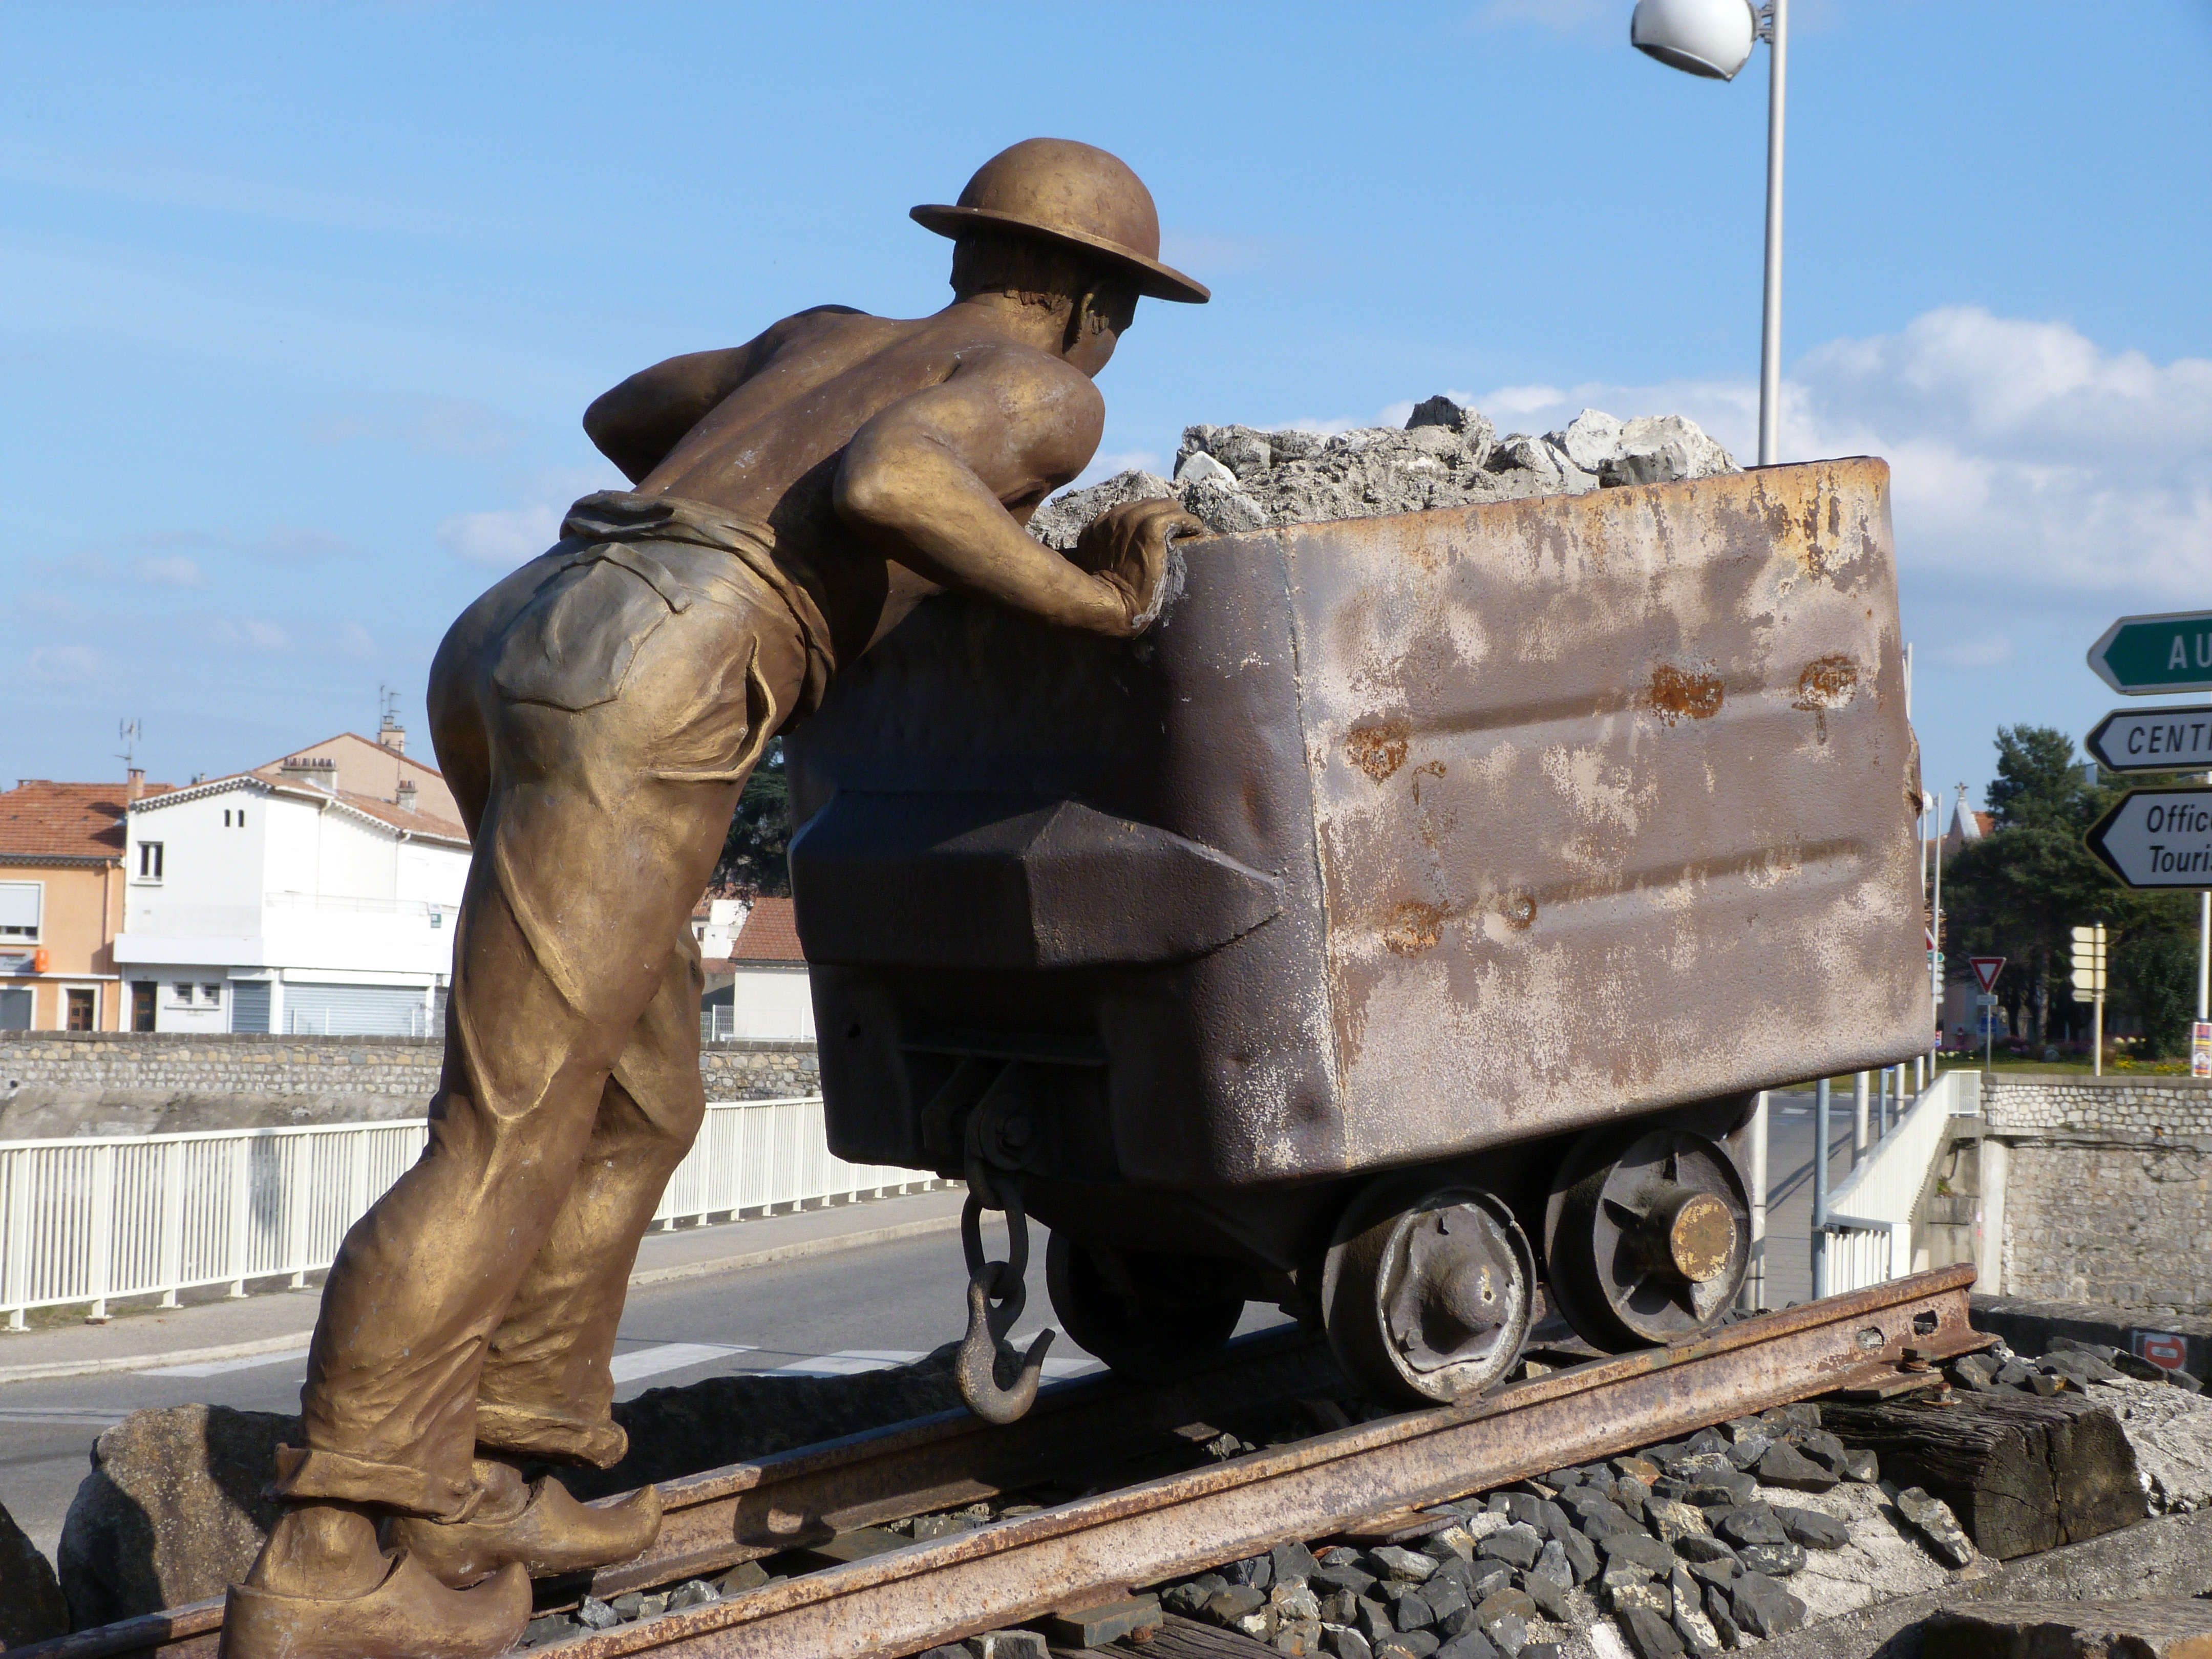 mining-man-wagon-monument-transport-statue-vehicle-935617-pxhere.com